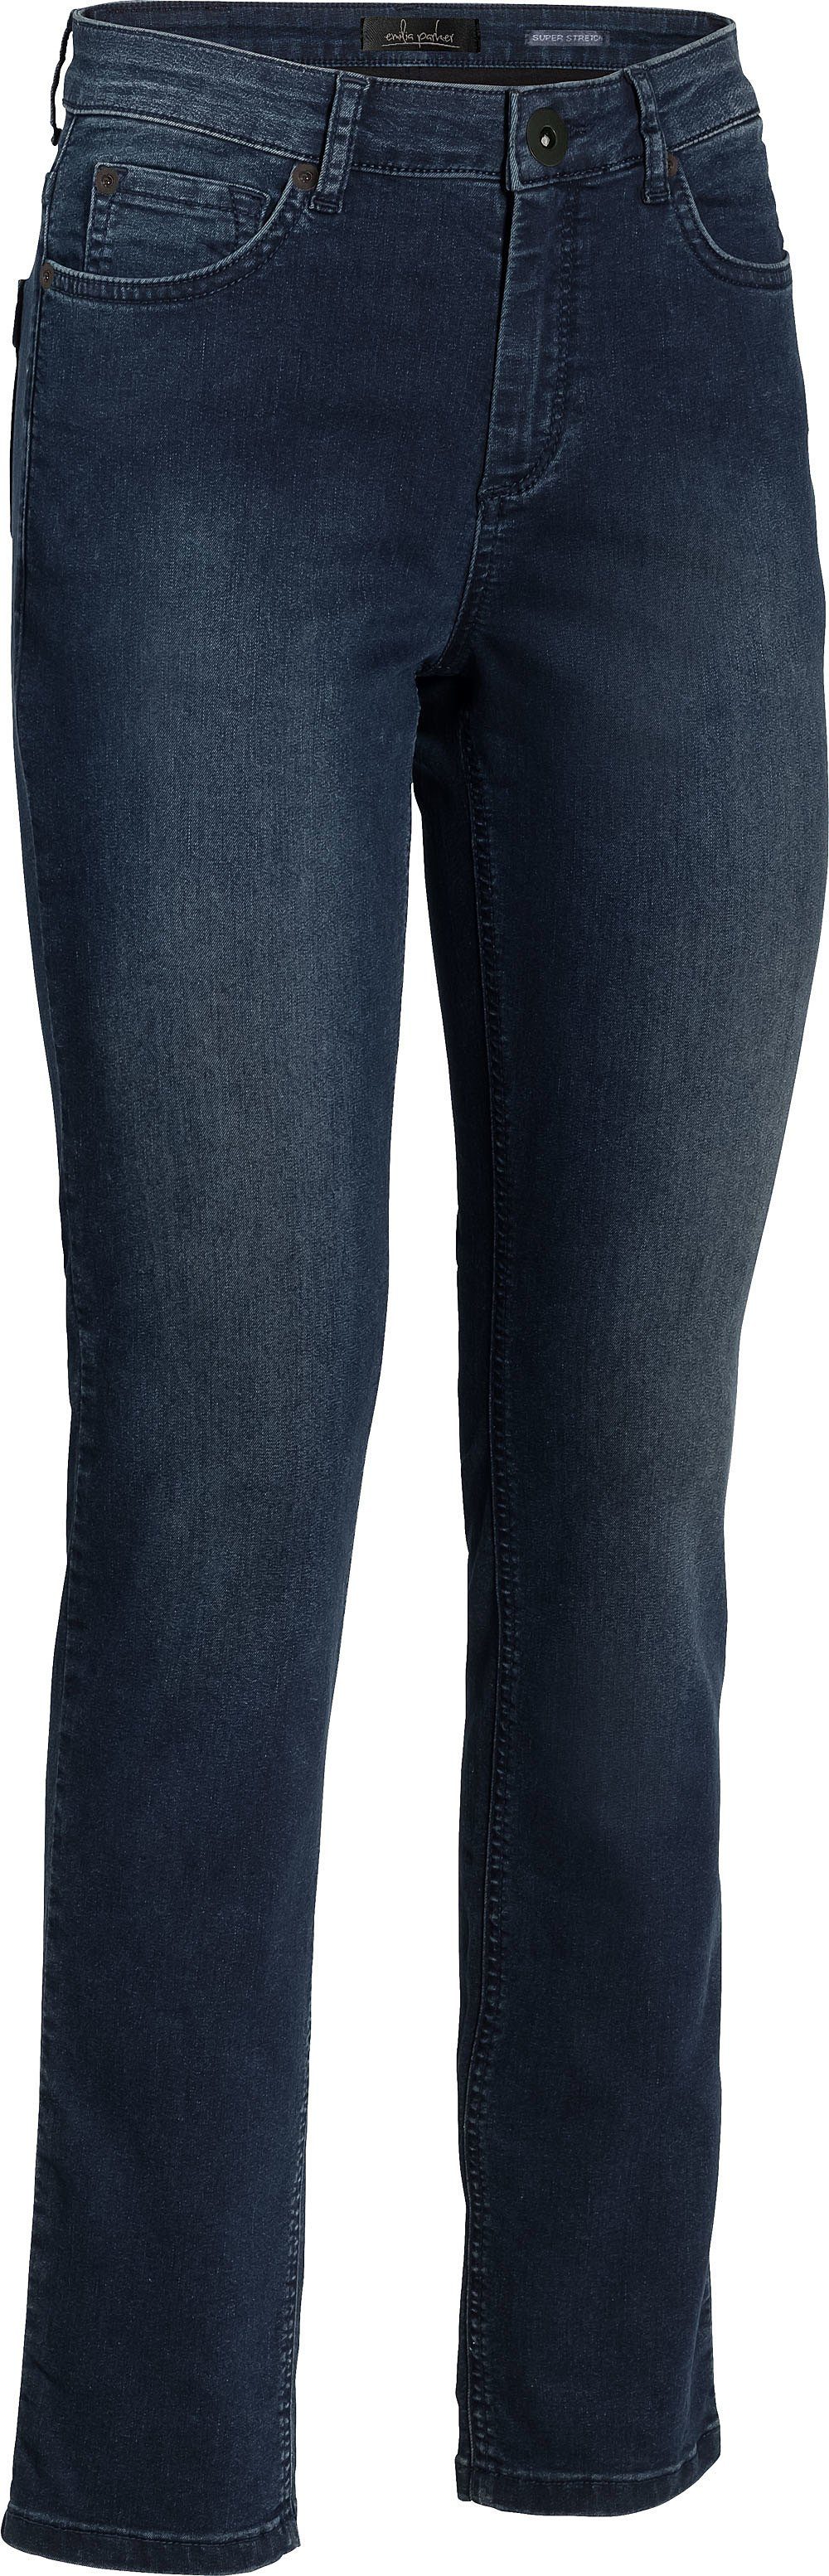 Emilia Parker Stretch-Hose ultrabequeme Jeans mit knackigem Sitz mittelblau